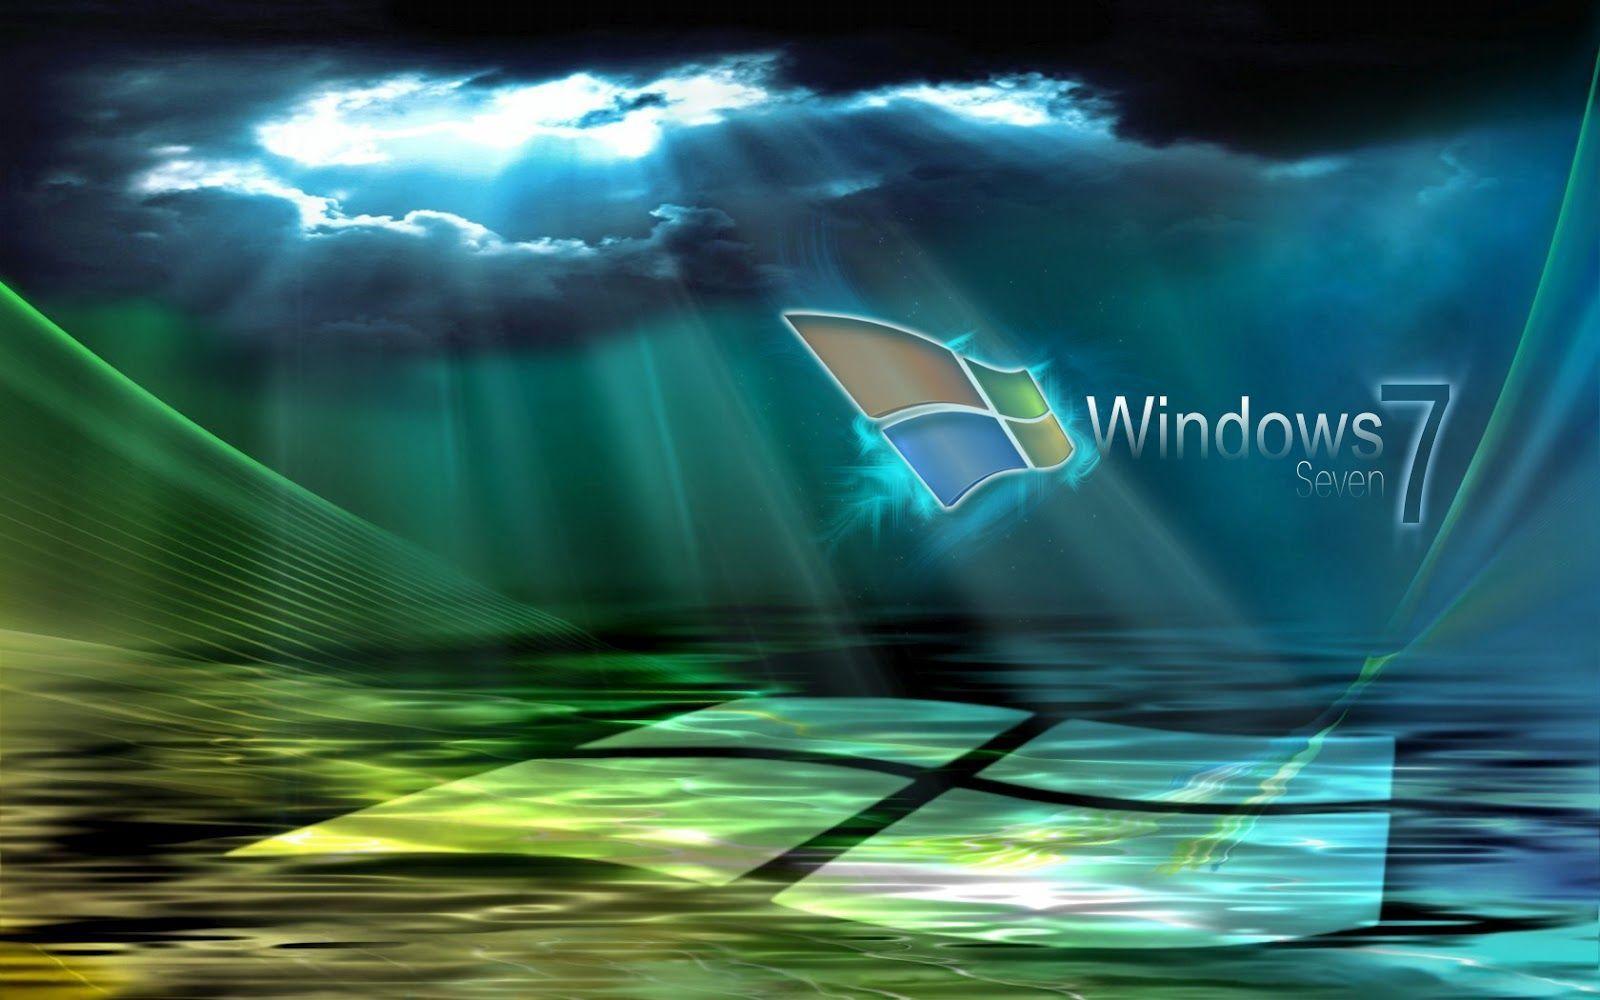 Best Windows Wallpaper in HD. Computer wallpaper desktop